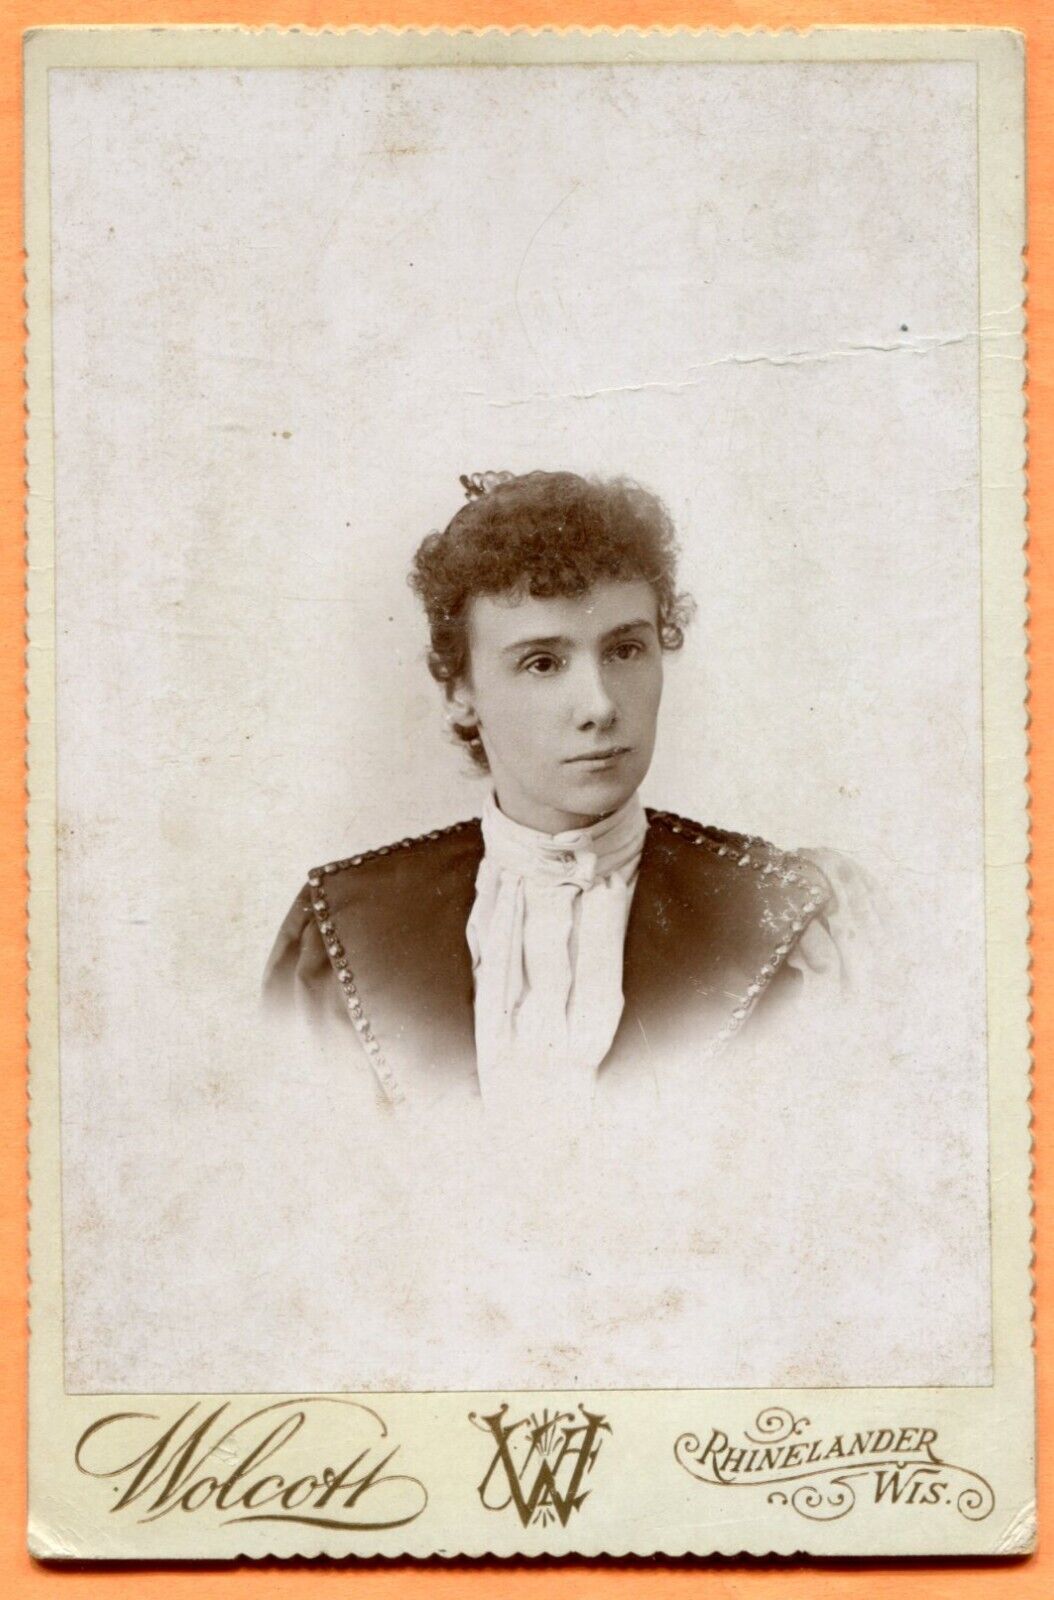 Rhinelander WI, Portrait of a Young Woman, by Wolcott, circa 1890s